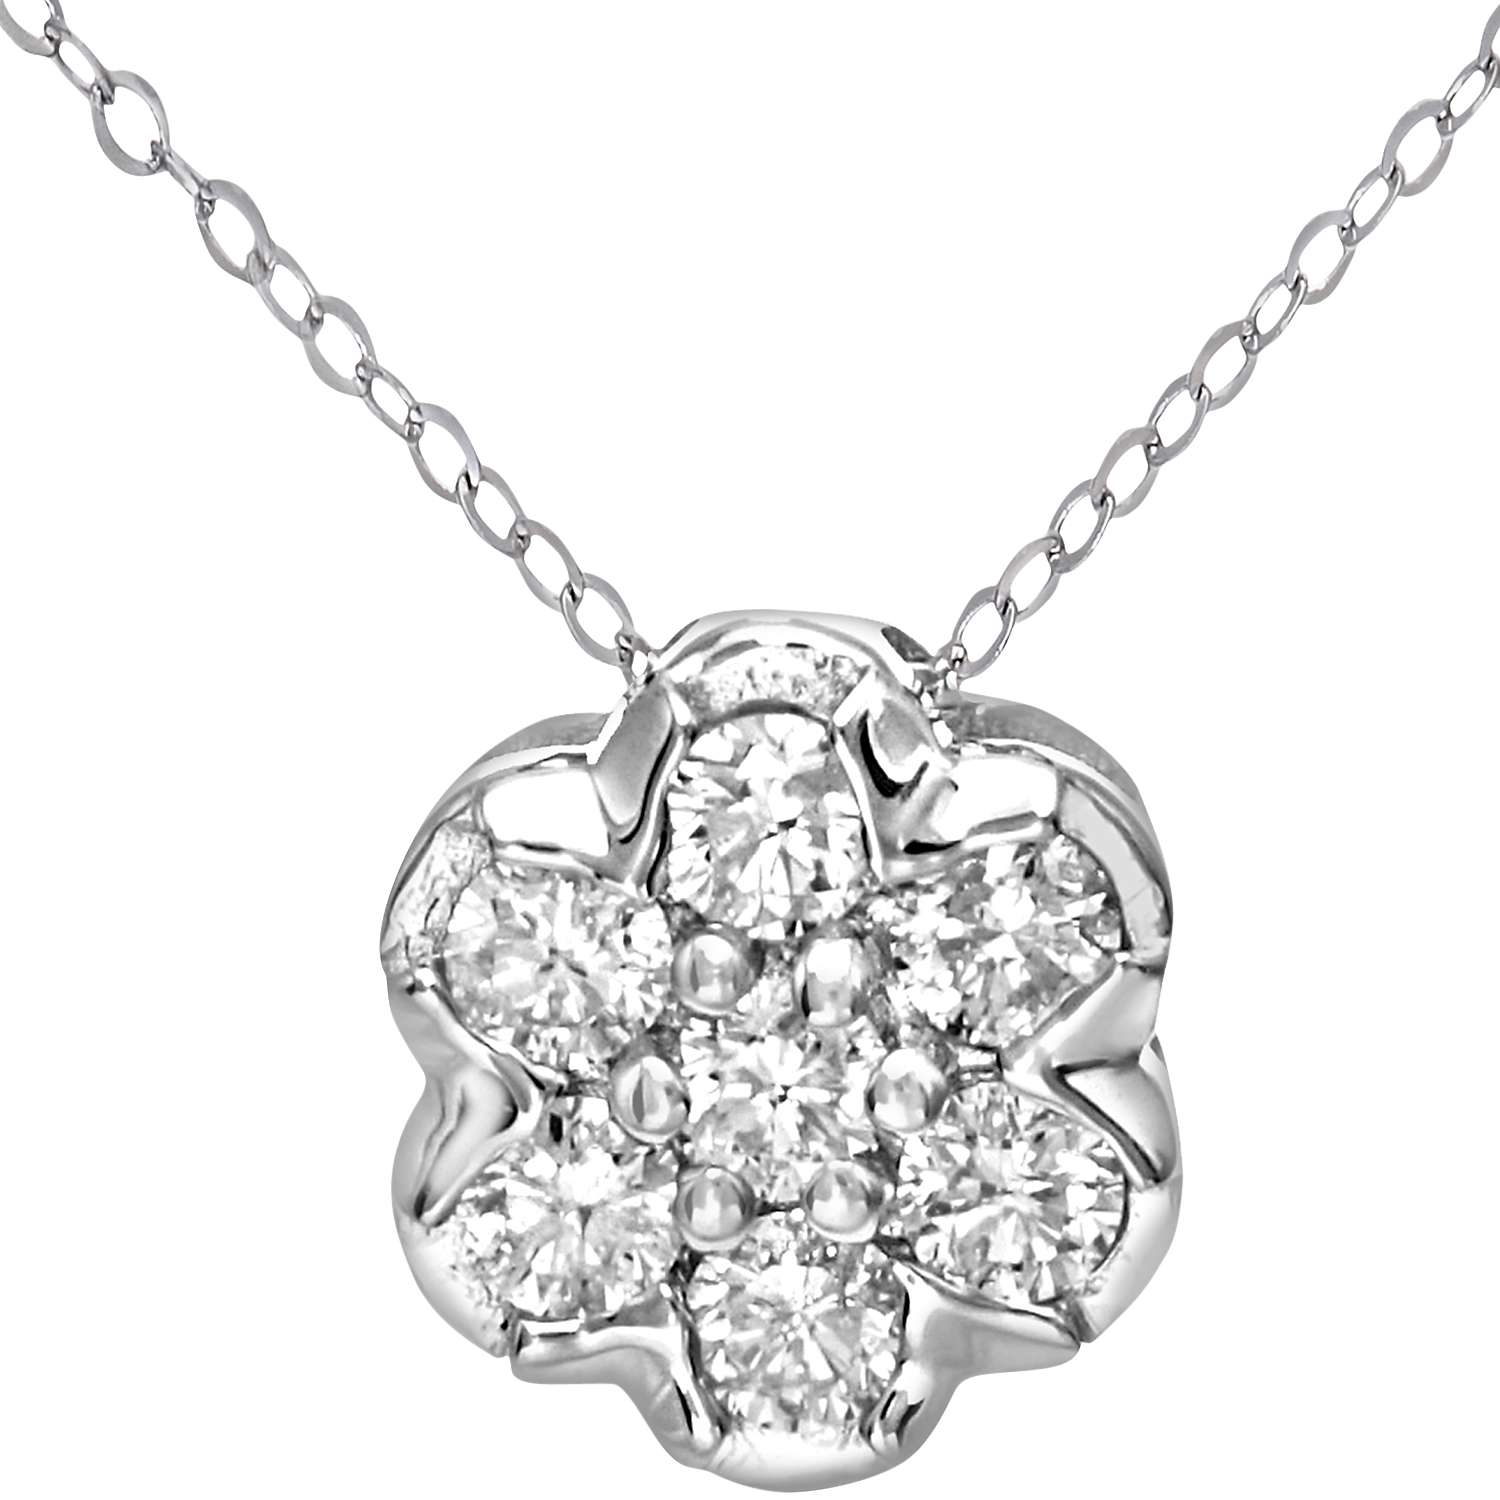 Buy Mogul 9ct White Gold Diamond Flower Pendant Necklace, 0.15ct Online at johnlewis.com